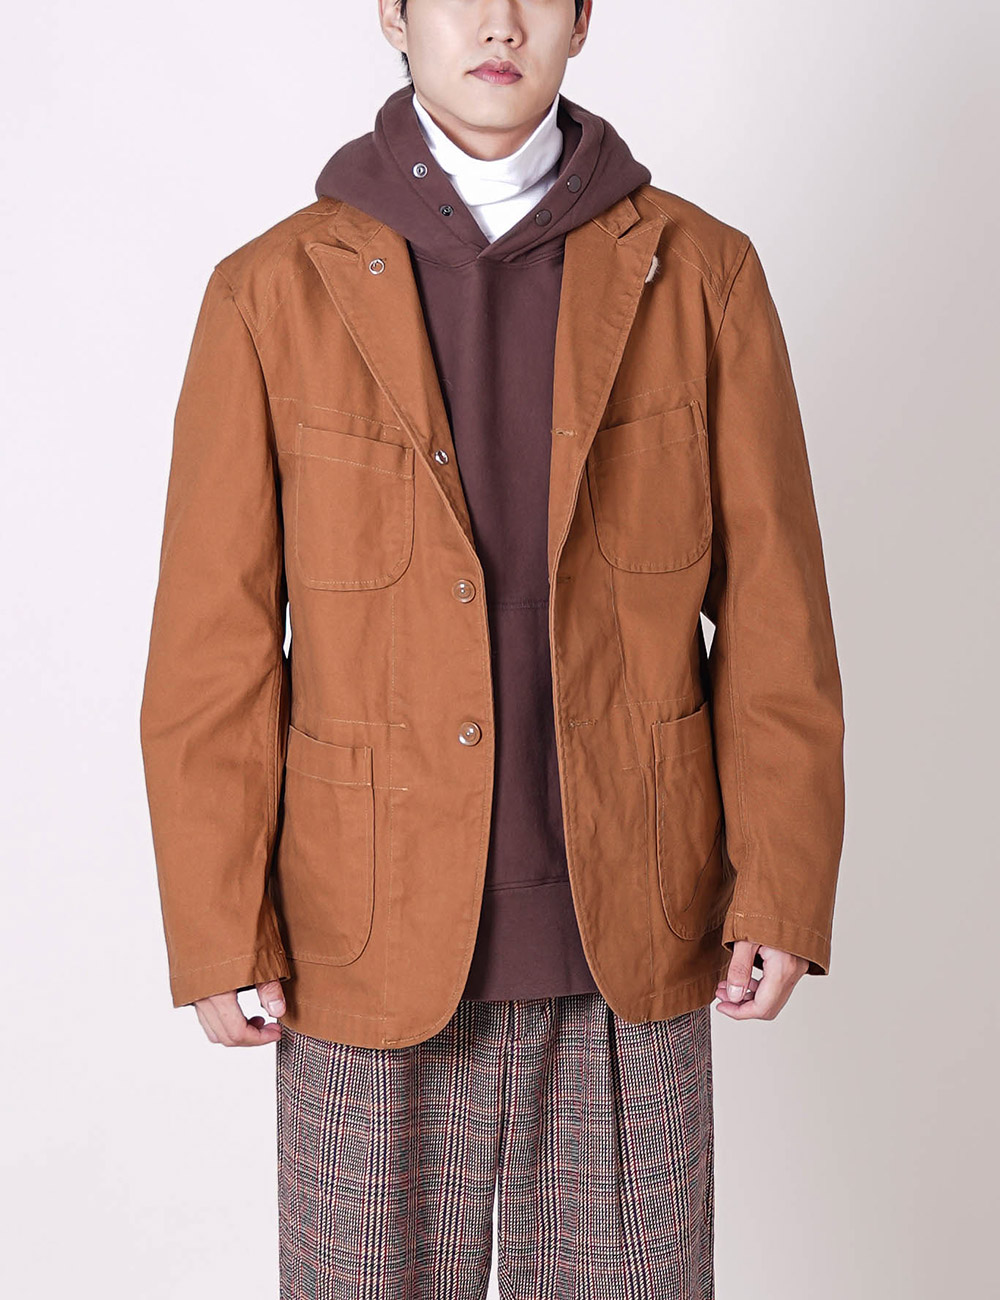 Engineered Garments : Bedford Jacket (Brown 12oz Duck Canvas)